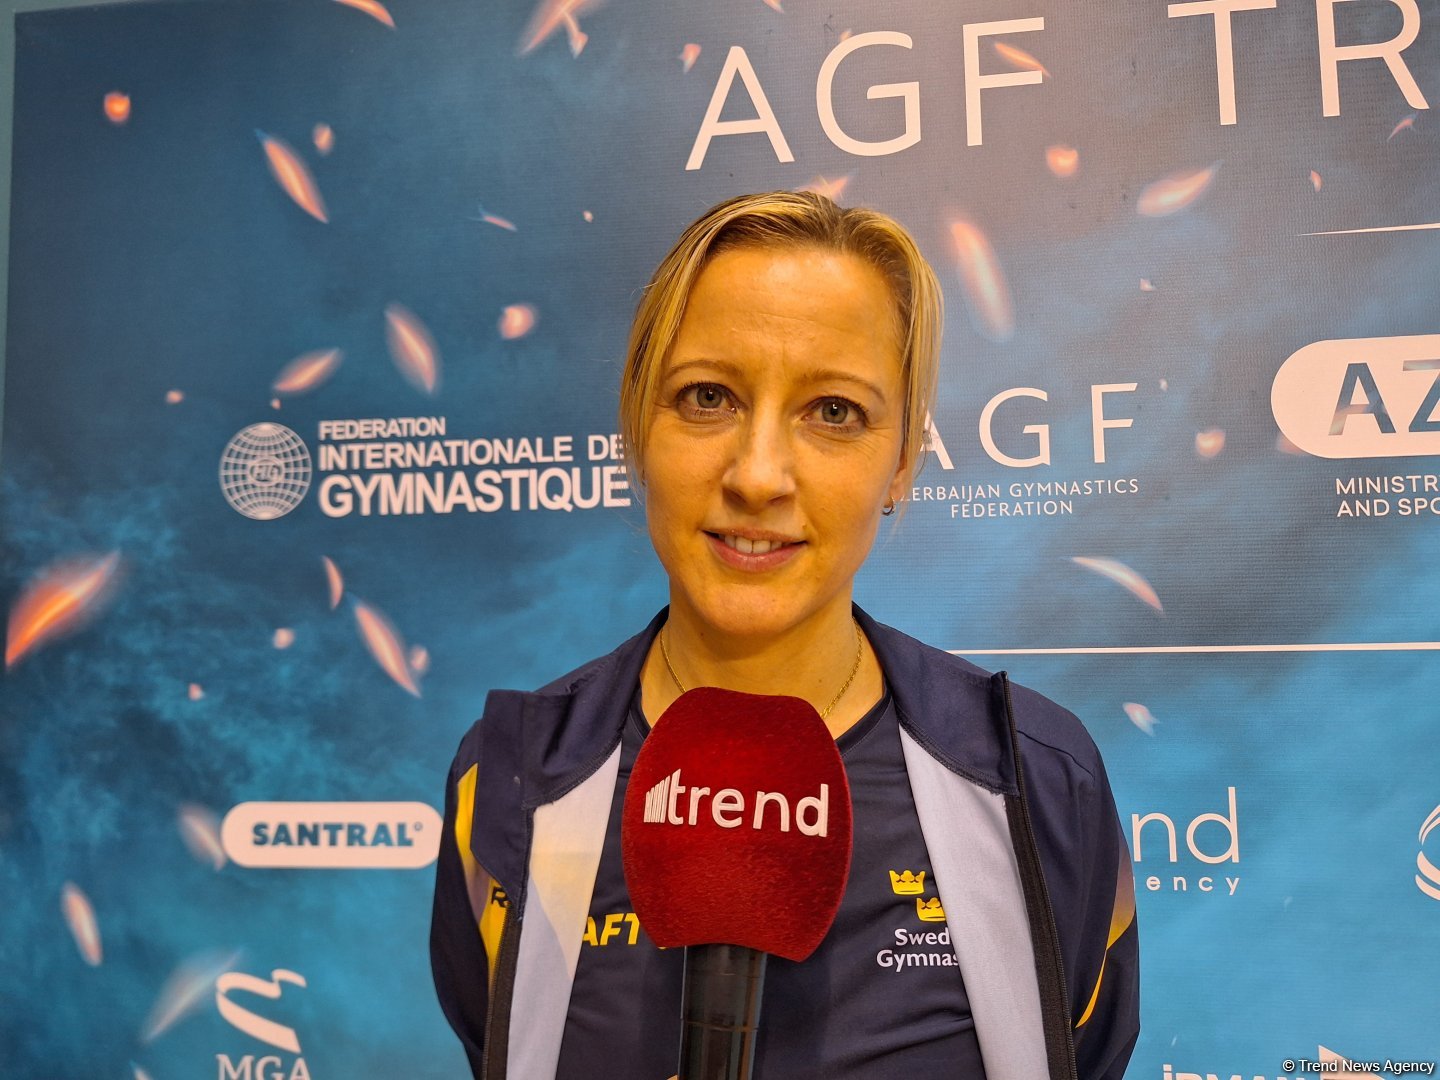 Azerbaijan Gymnastics Federation organizes competitions with high professionalism - Swedish coach